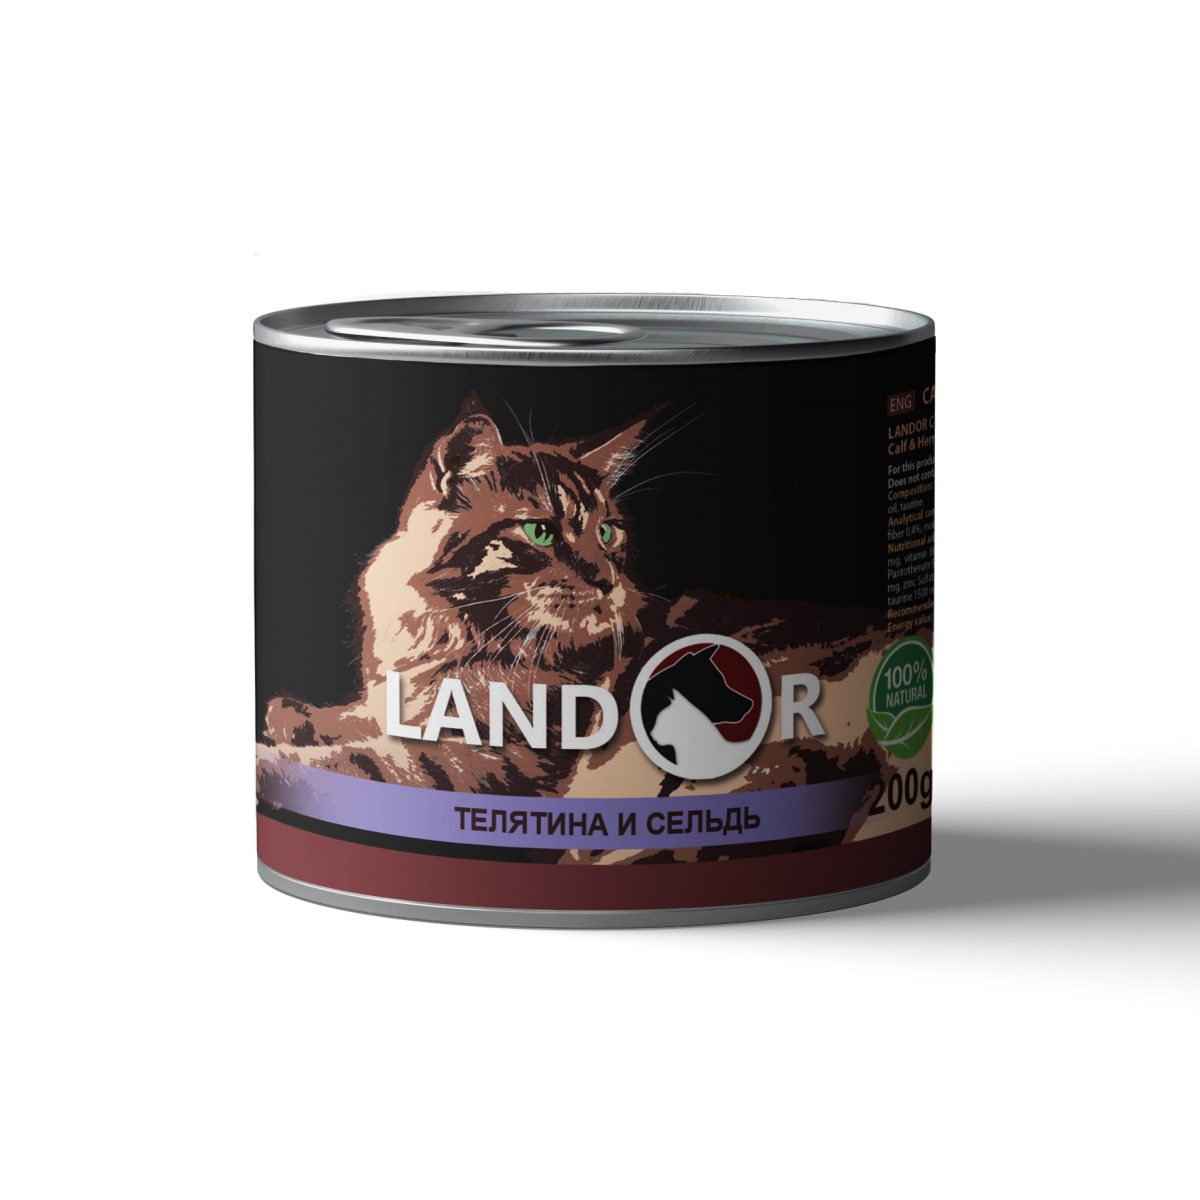 Корм cat turkey для кошек. Landor корм для кошек. Landor консервы для кошек. Landor влажный корм для кошек. Landor консервы для котят индейка с уткой,200 г.